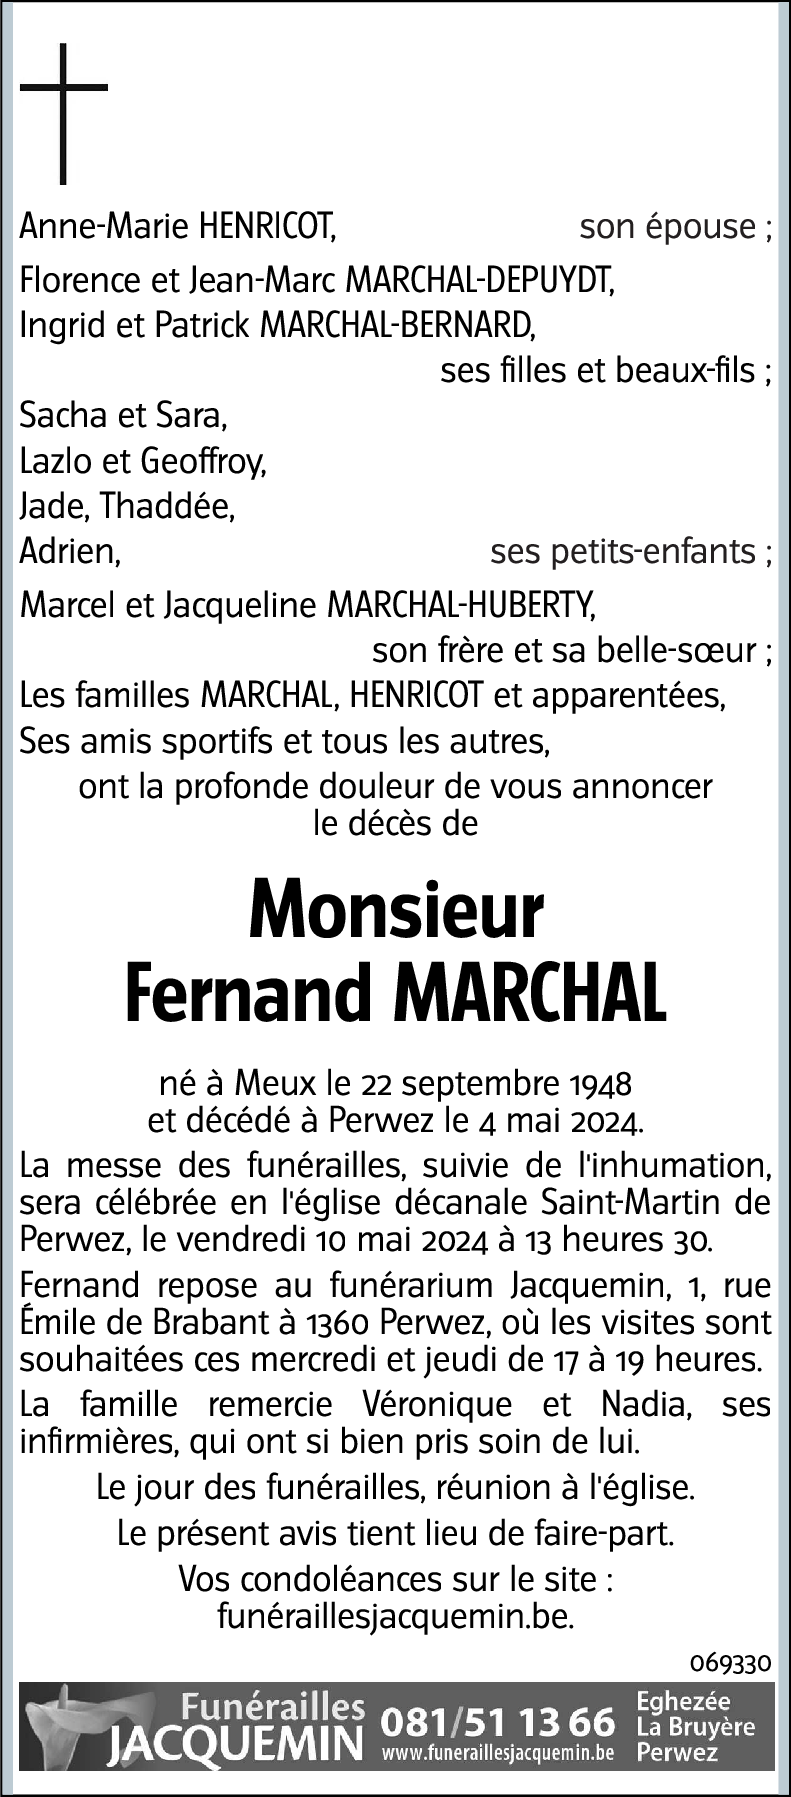 Fernand Marchal